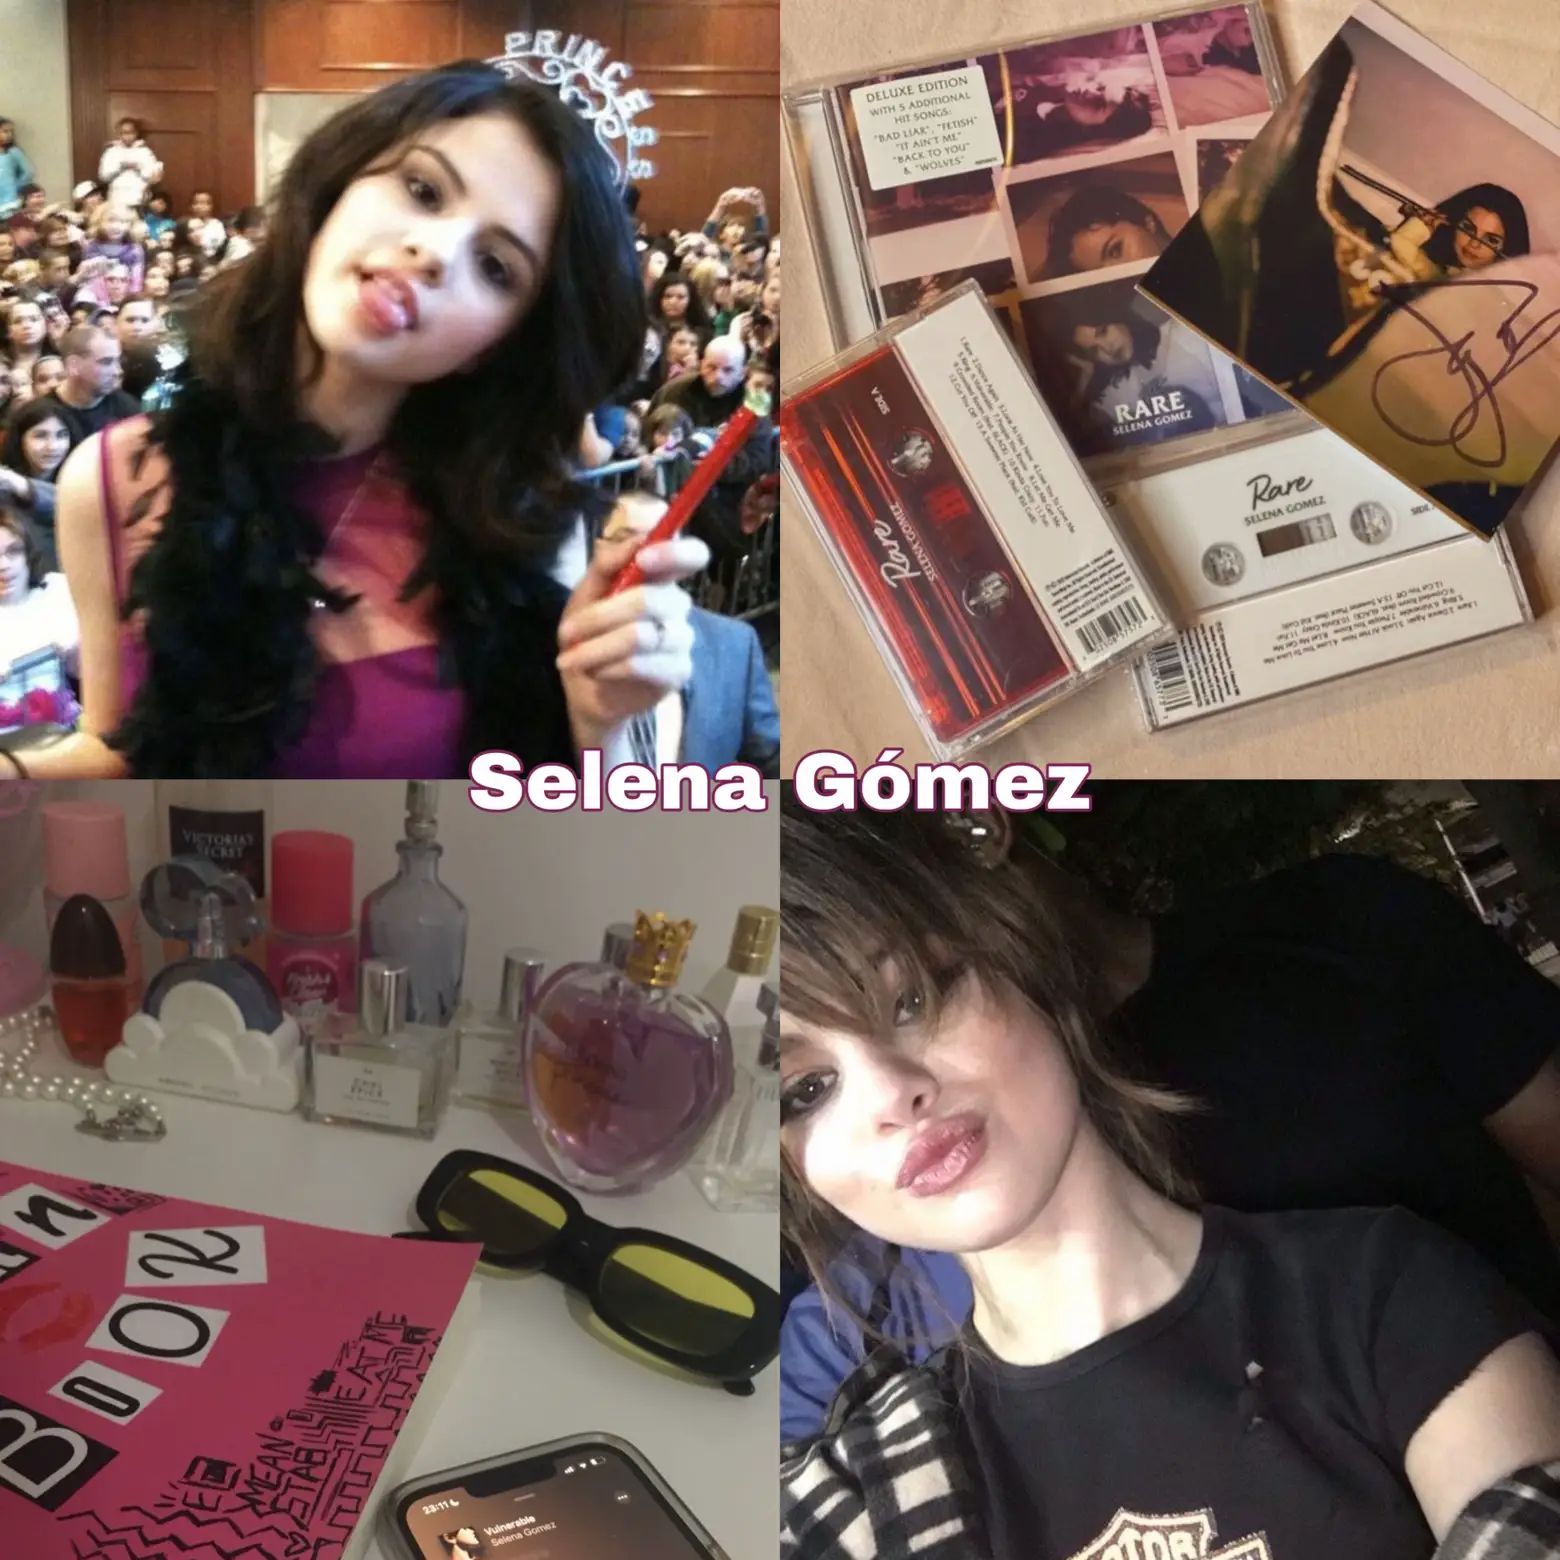  A collage of photos of Selena Gomez.